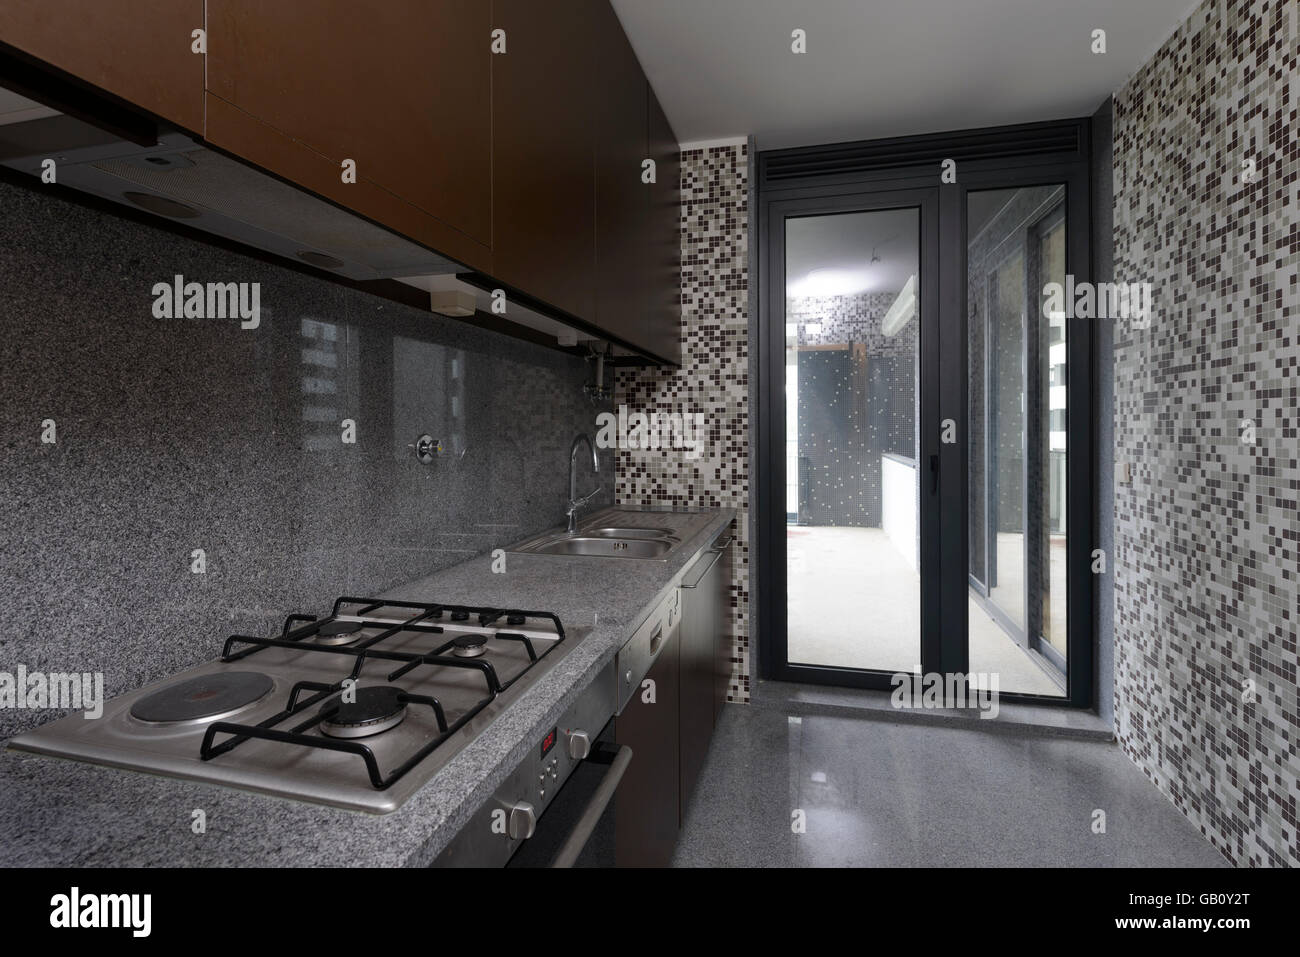 https://c8.alamy.com/comp/GB0Y2T/small-kitchen-with-modern-design-GB0Y2T.jpg